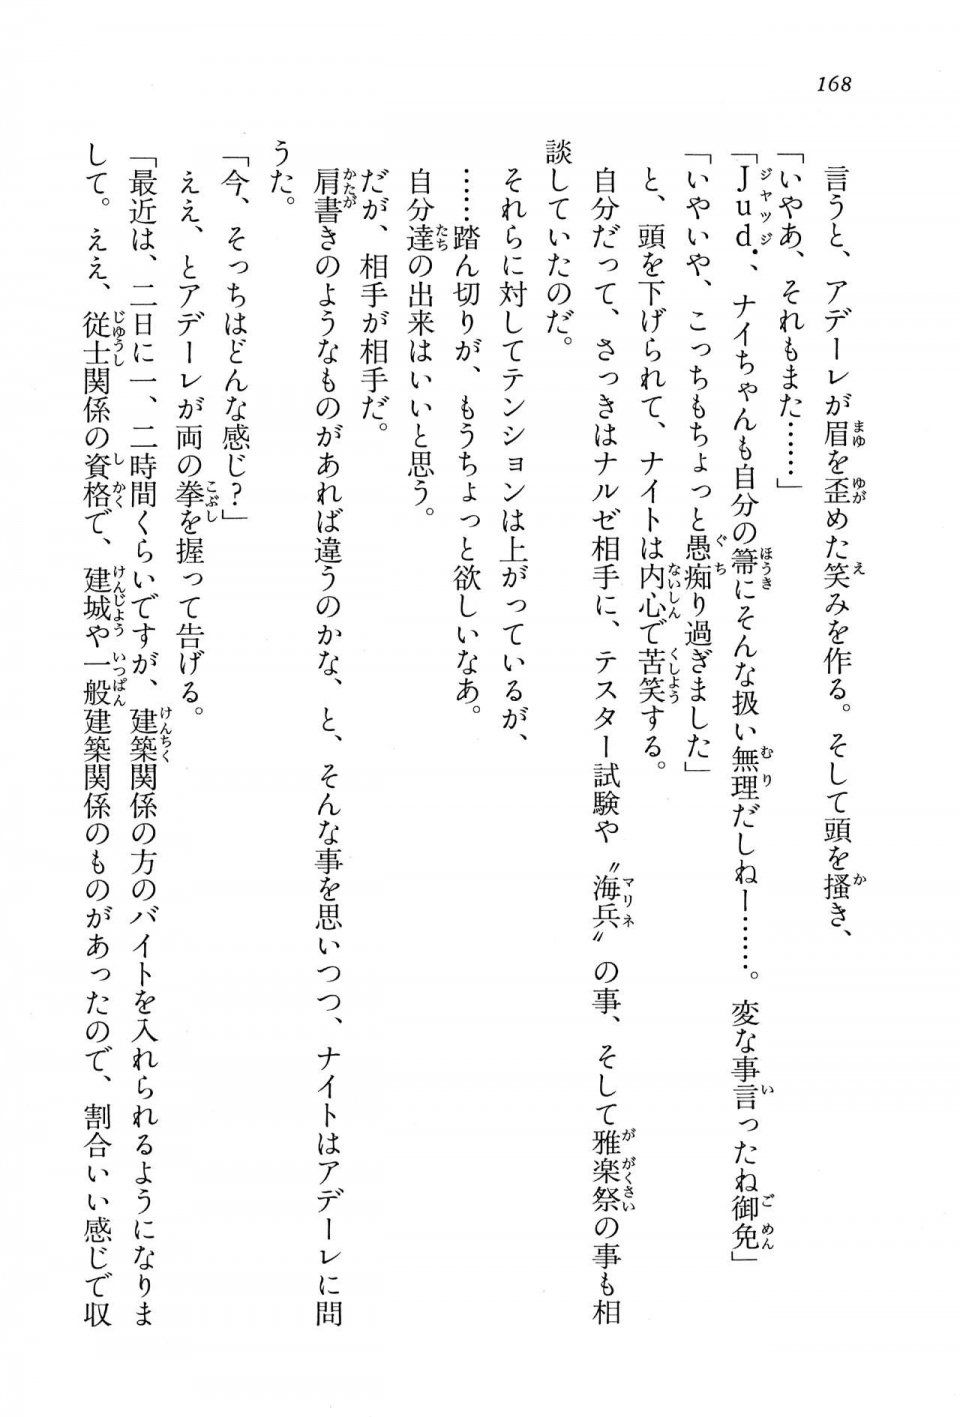 Kyoukai Senjou no Horizon BD Special Mininovel Vol 6(3B) - Photo #172